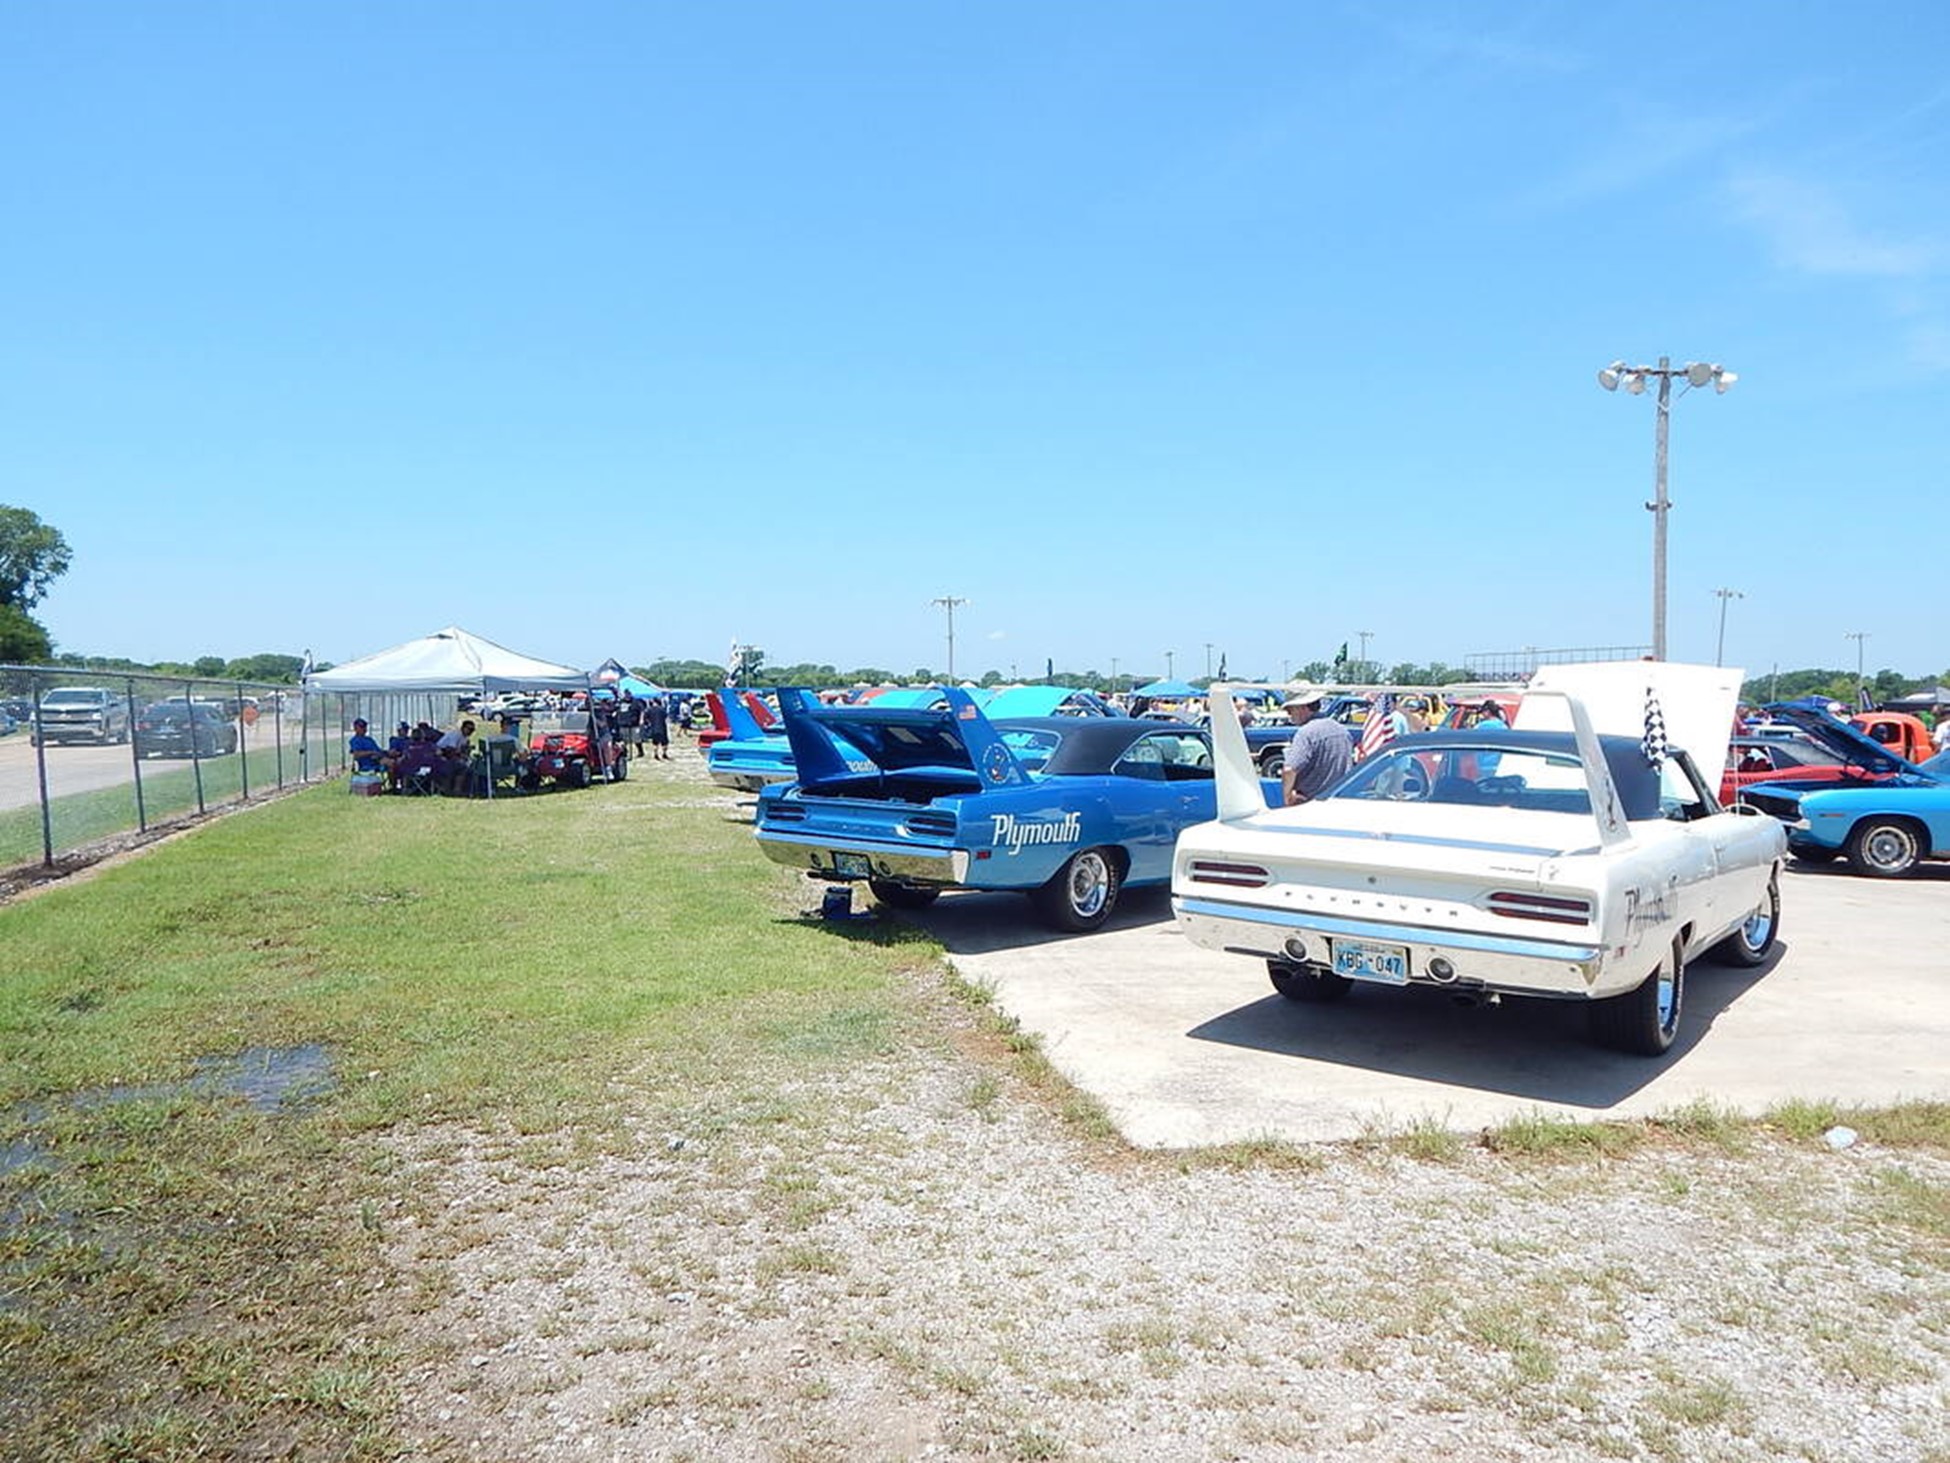 Mopar vehicles lined up for a car show